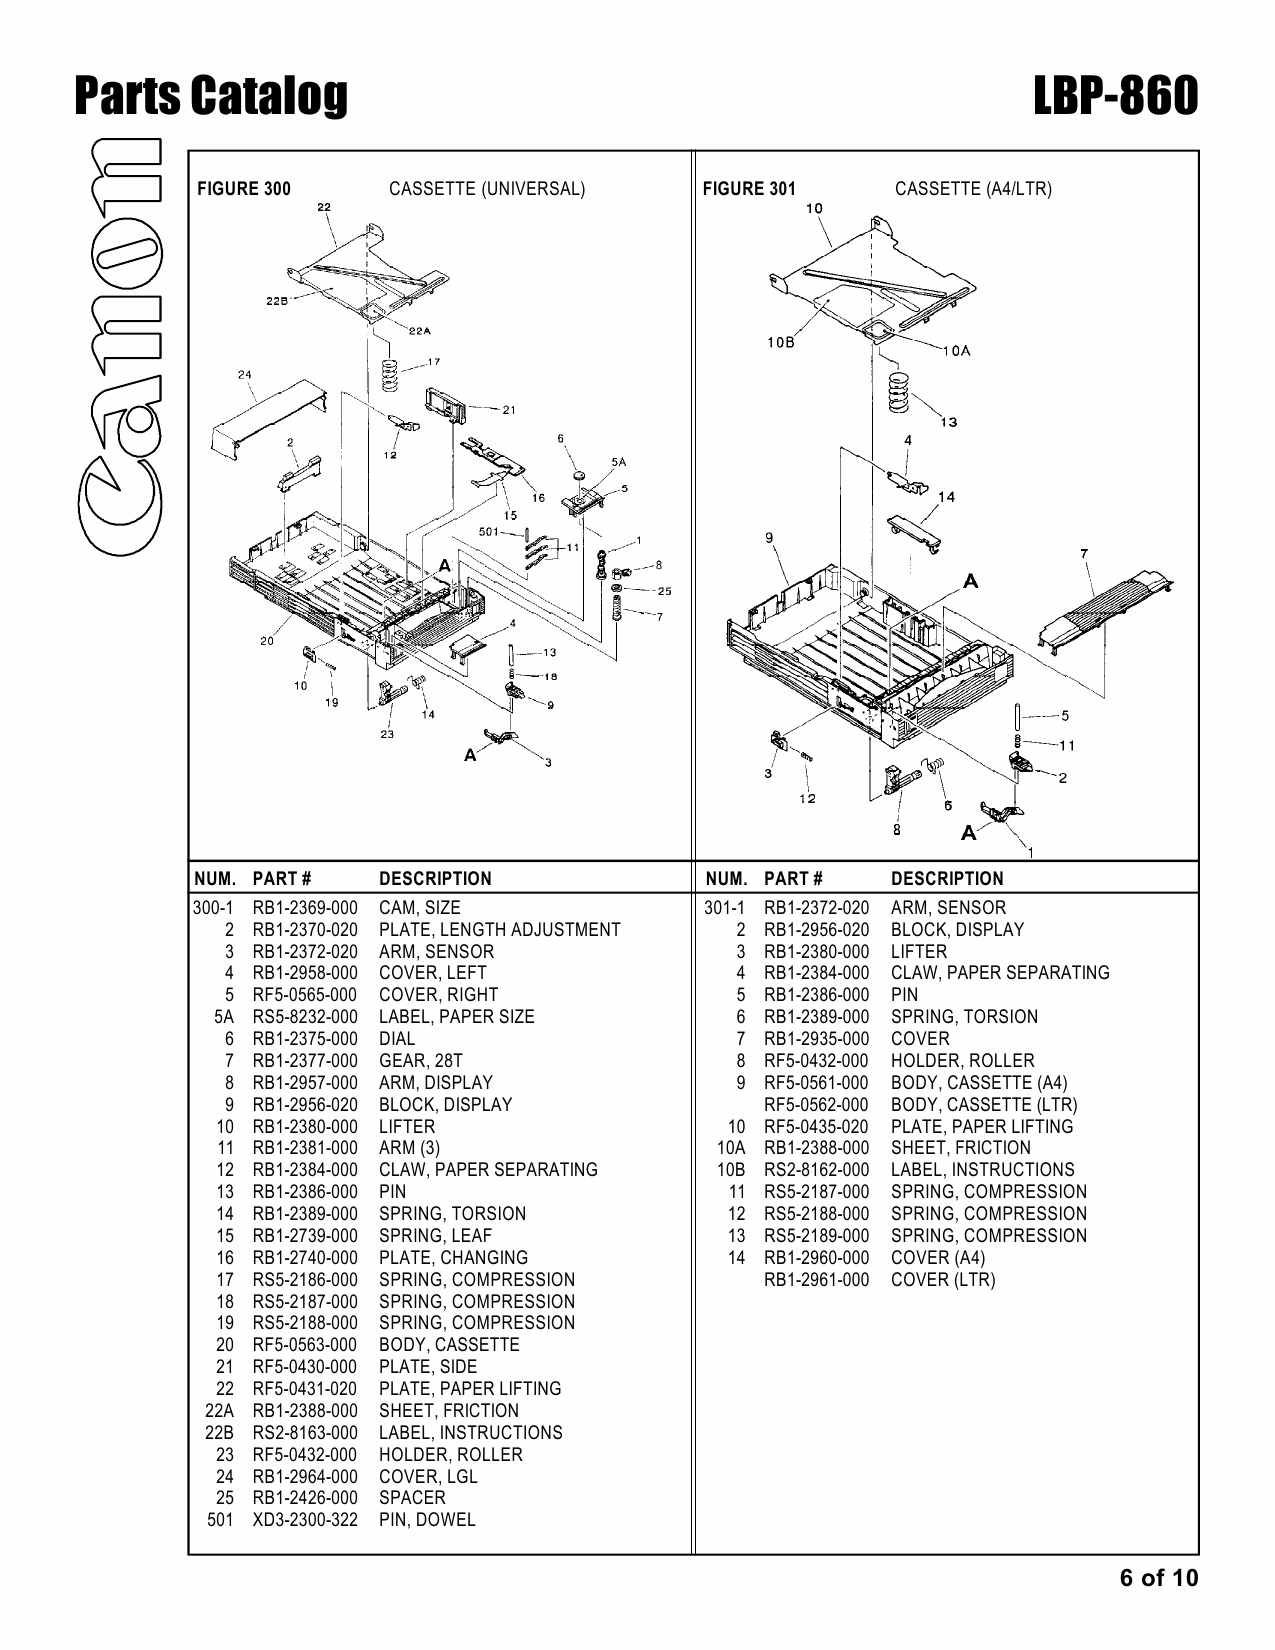 Canon imageCLASS LBP-860 Parts Catalog Manual-6